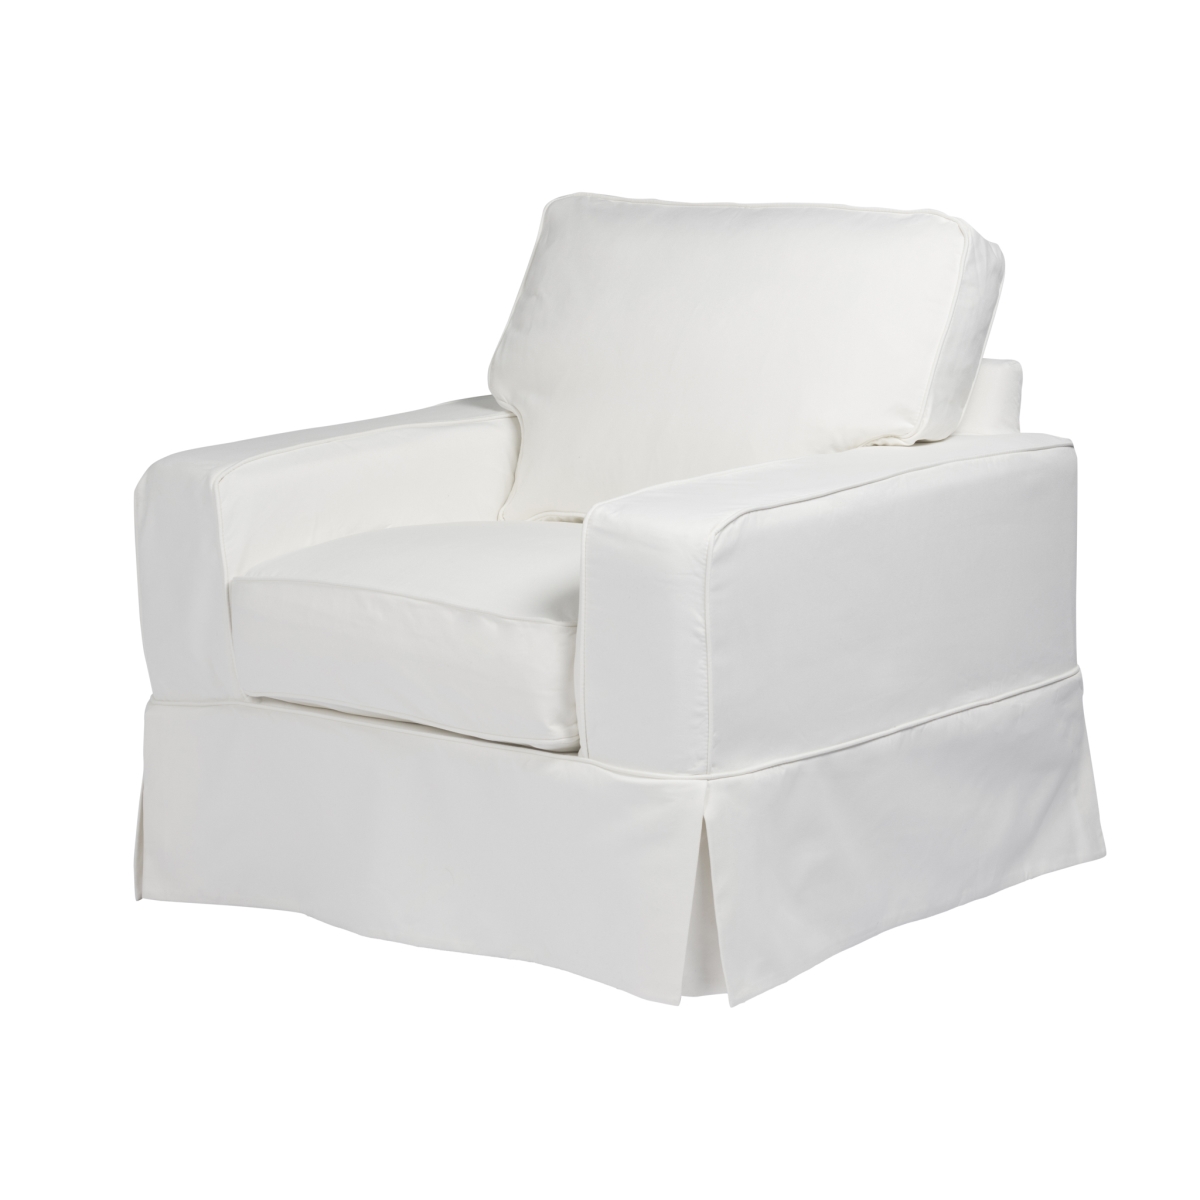 Su-108520sc-391081 Americana Chair Slipcover Set, Peyton Pearl